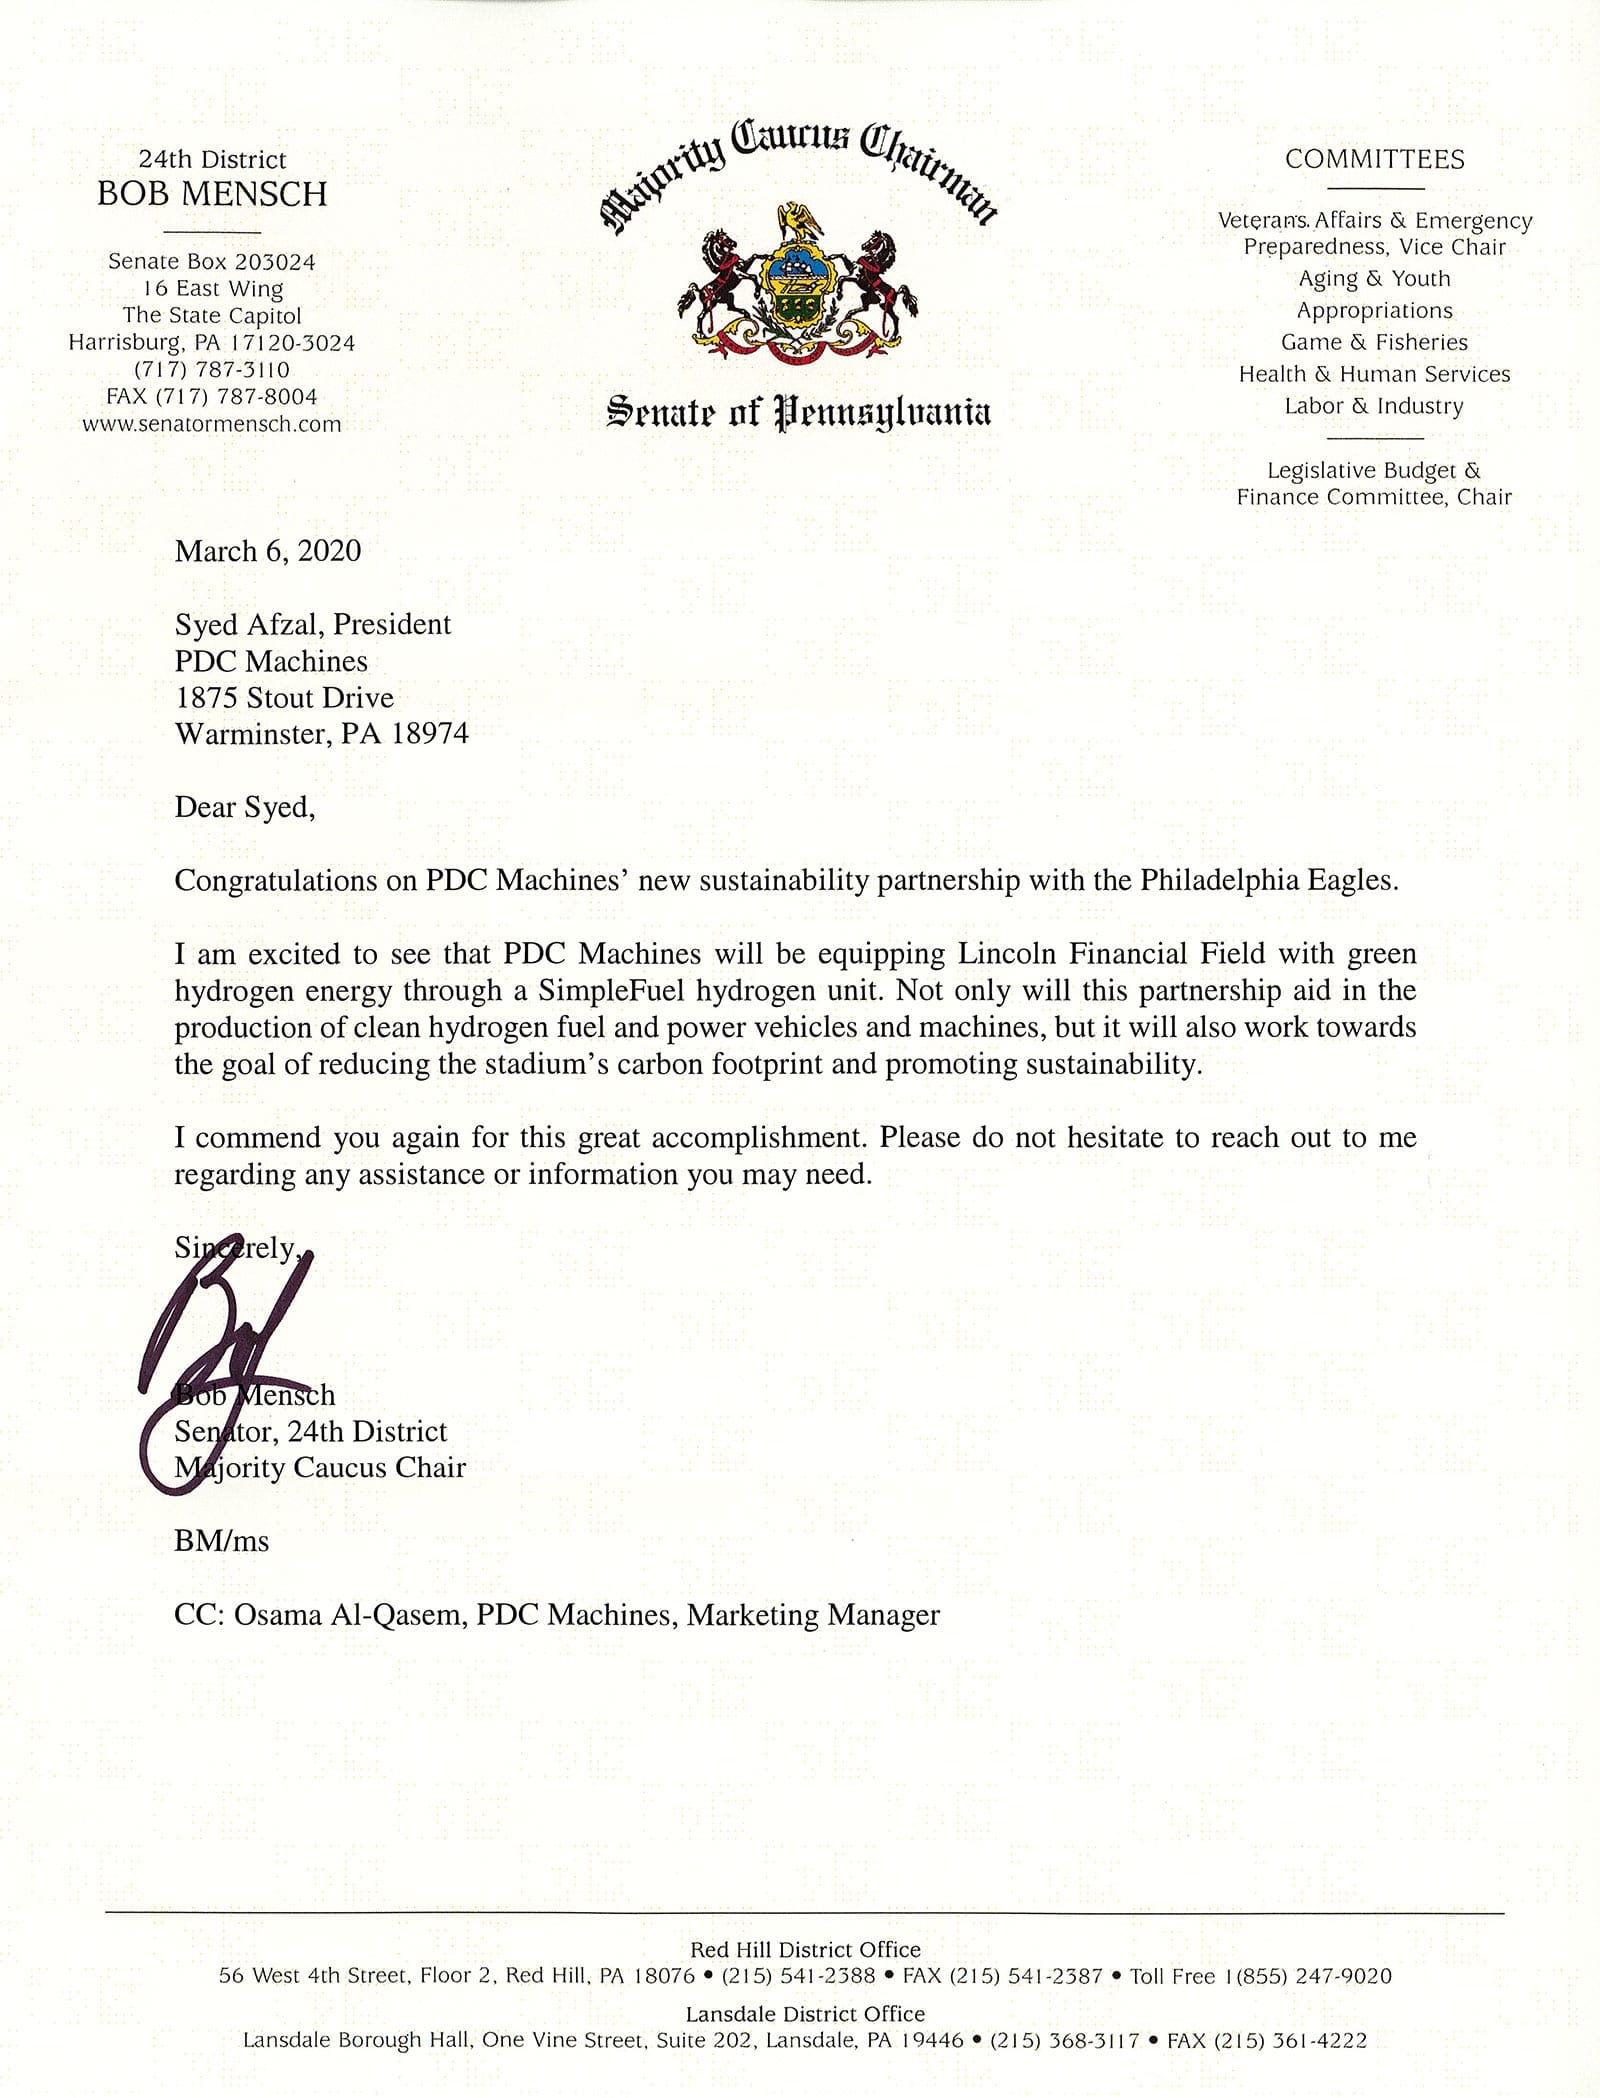 PDC Machines Senator Mensch congratulations letter